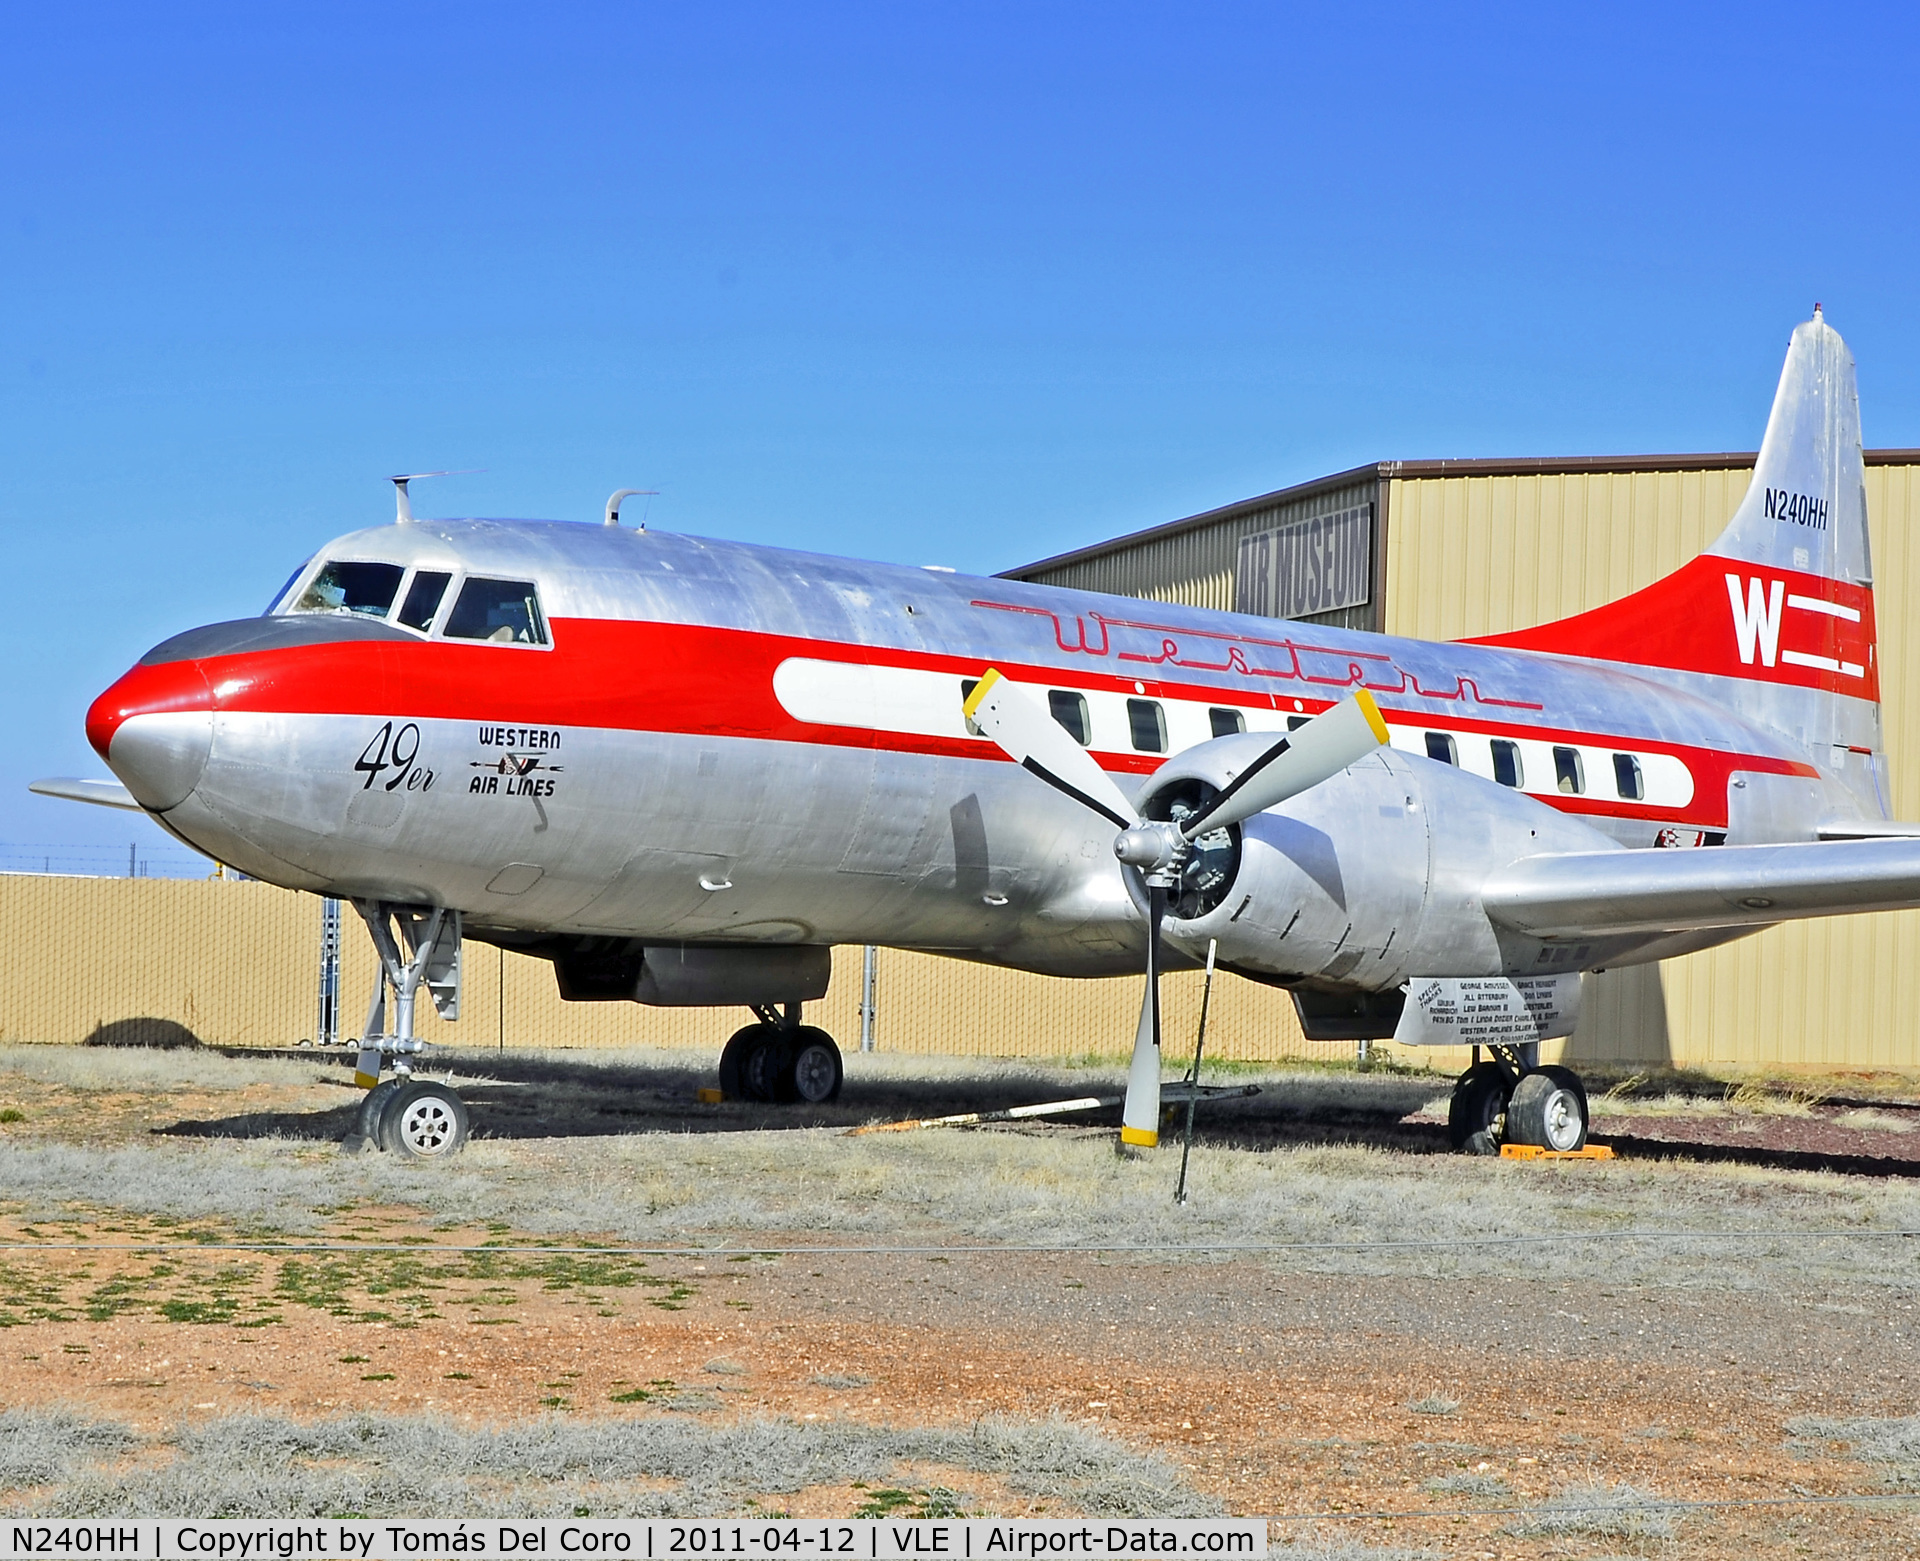 N240HH, 1948 Convair CV-240-1 C/N 47, Western Airlines 1948 Convair 240-1 N240HH (cn 47)

Planes of Fame Air Museum
Valle, AZ
TDelCoro
April 12, 2011